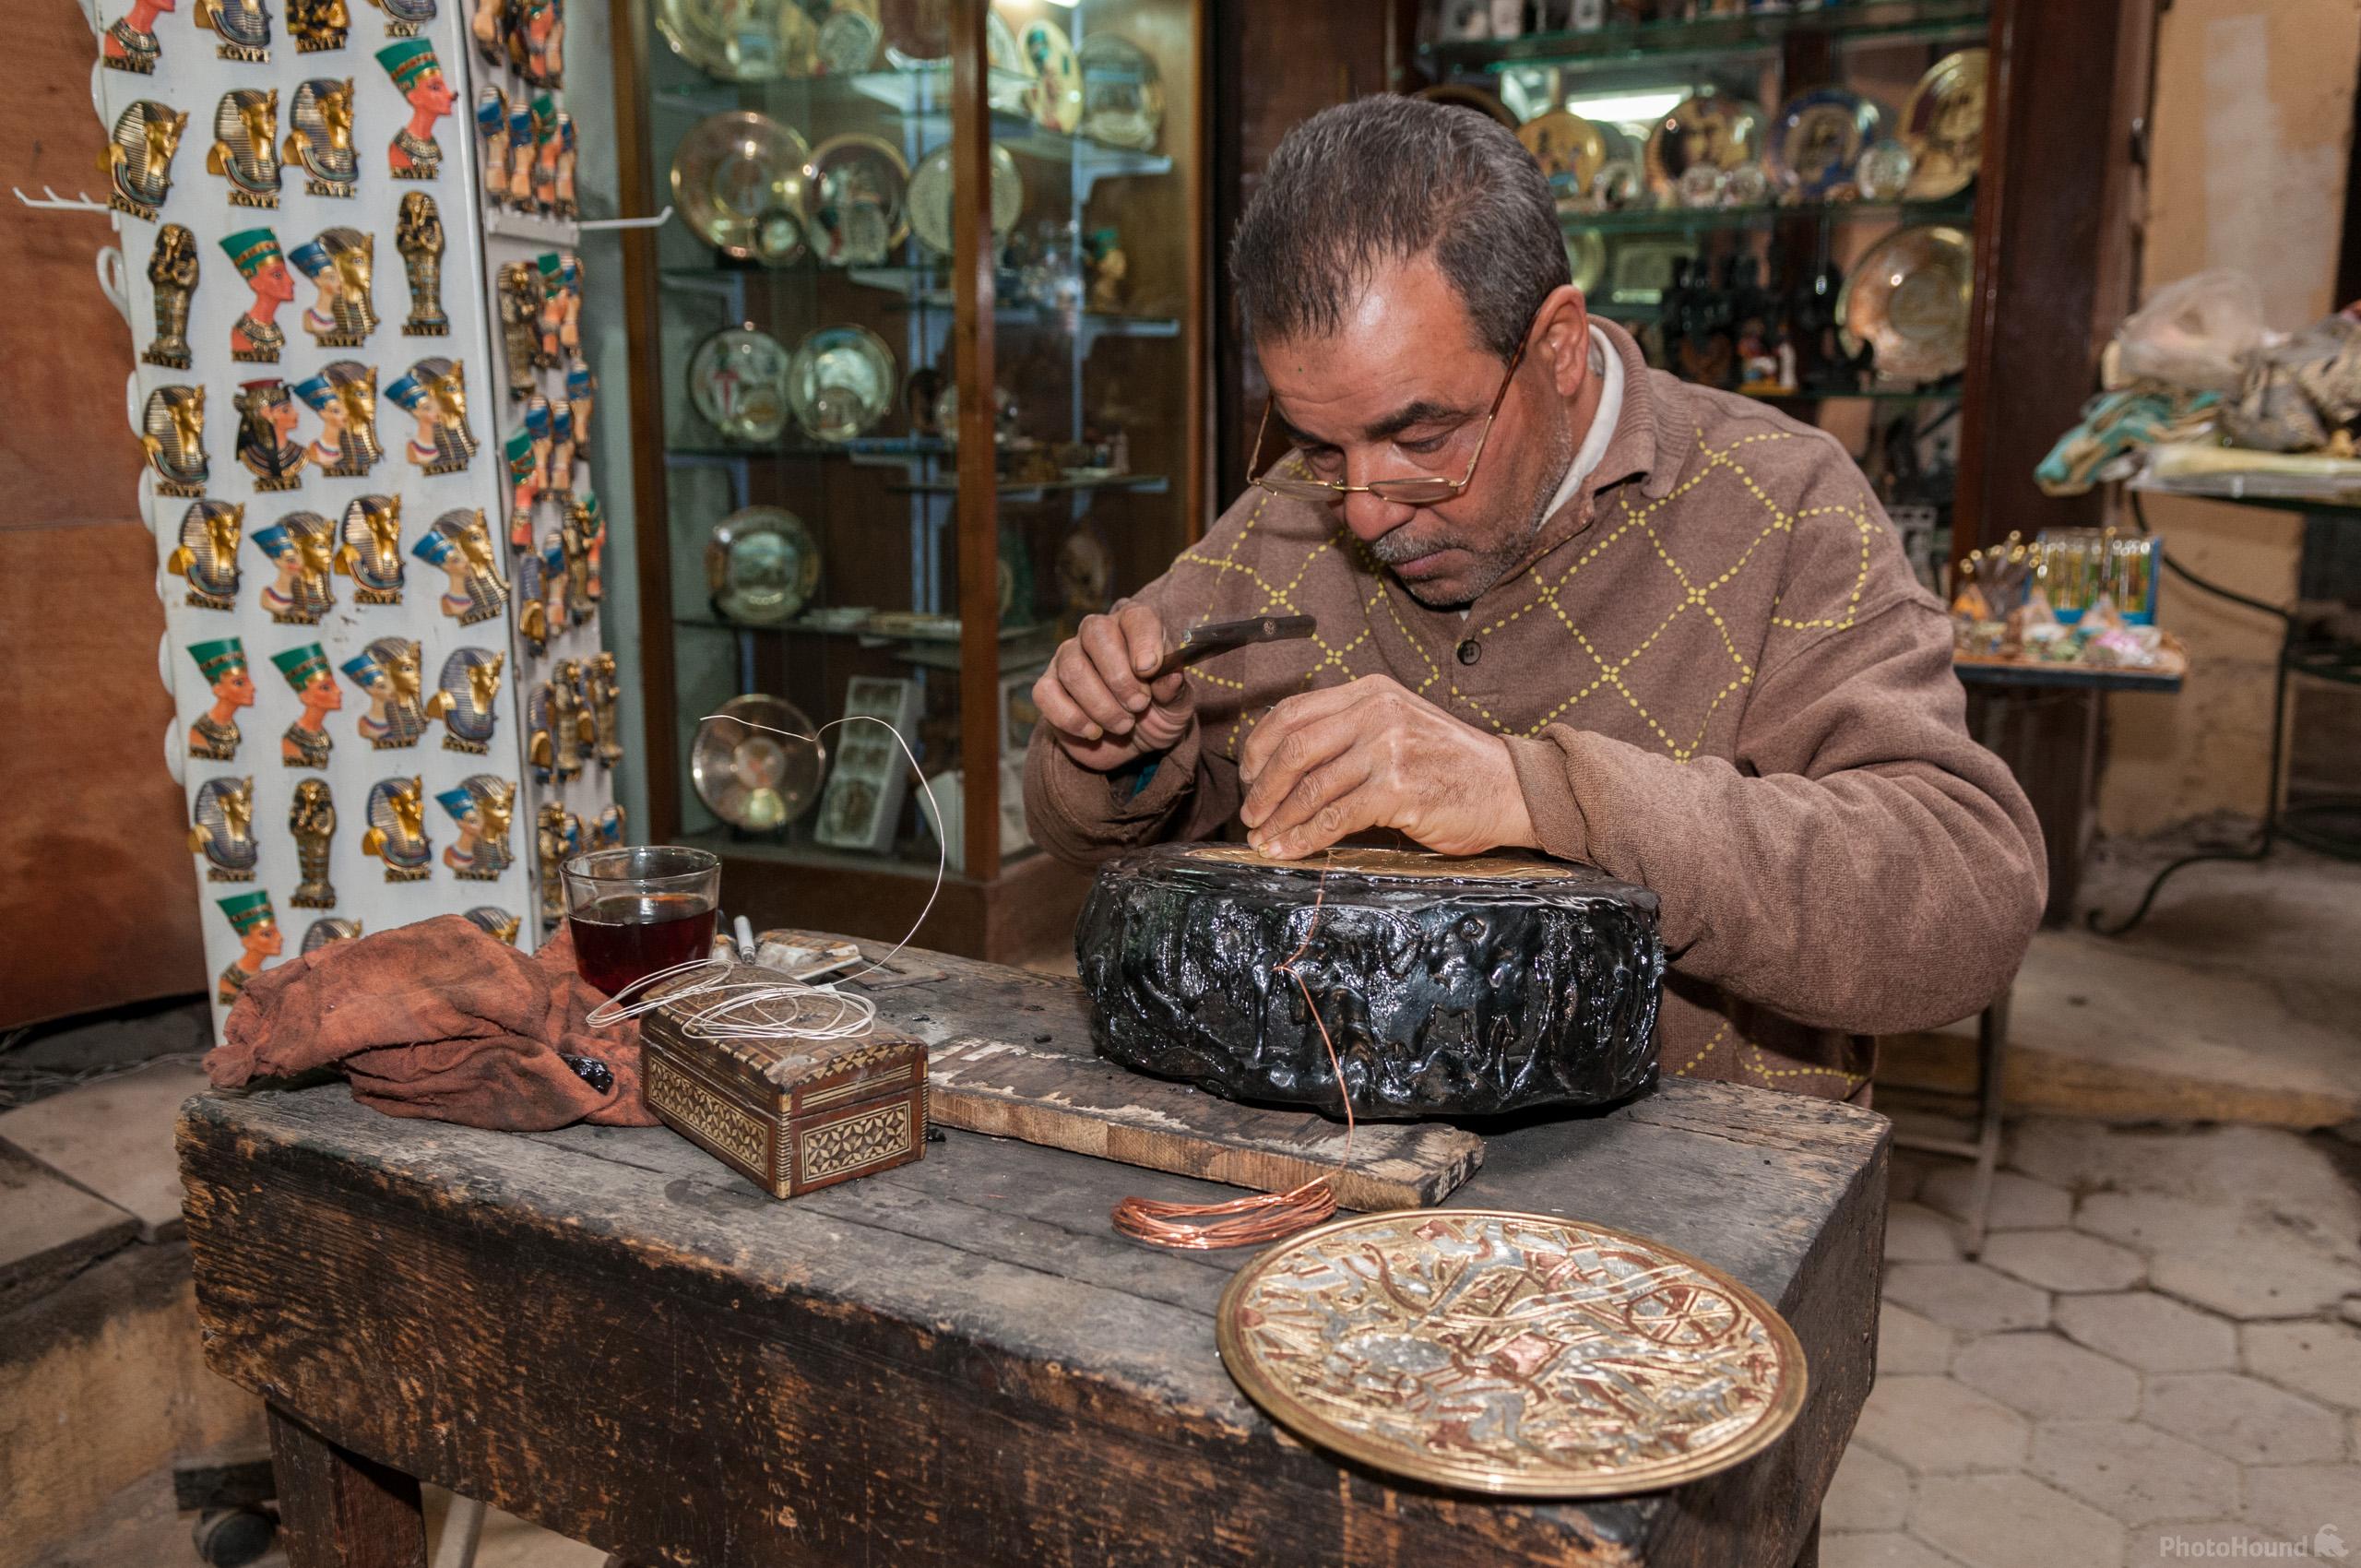 Image of Khan El-Khalili Bazaar by Luka Esenko